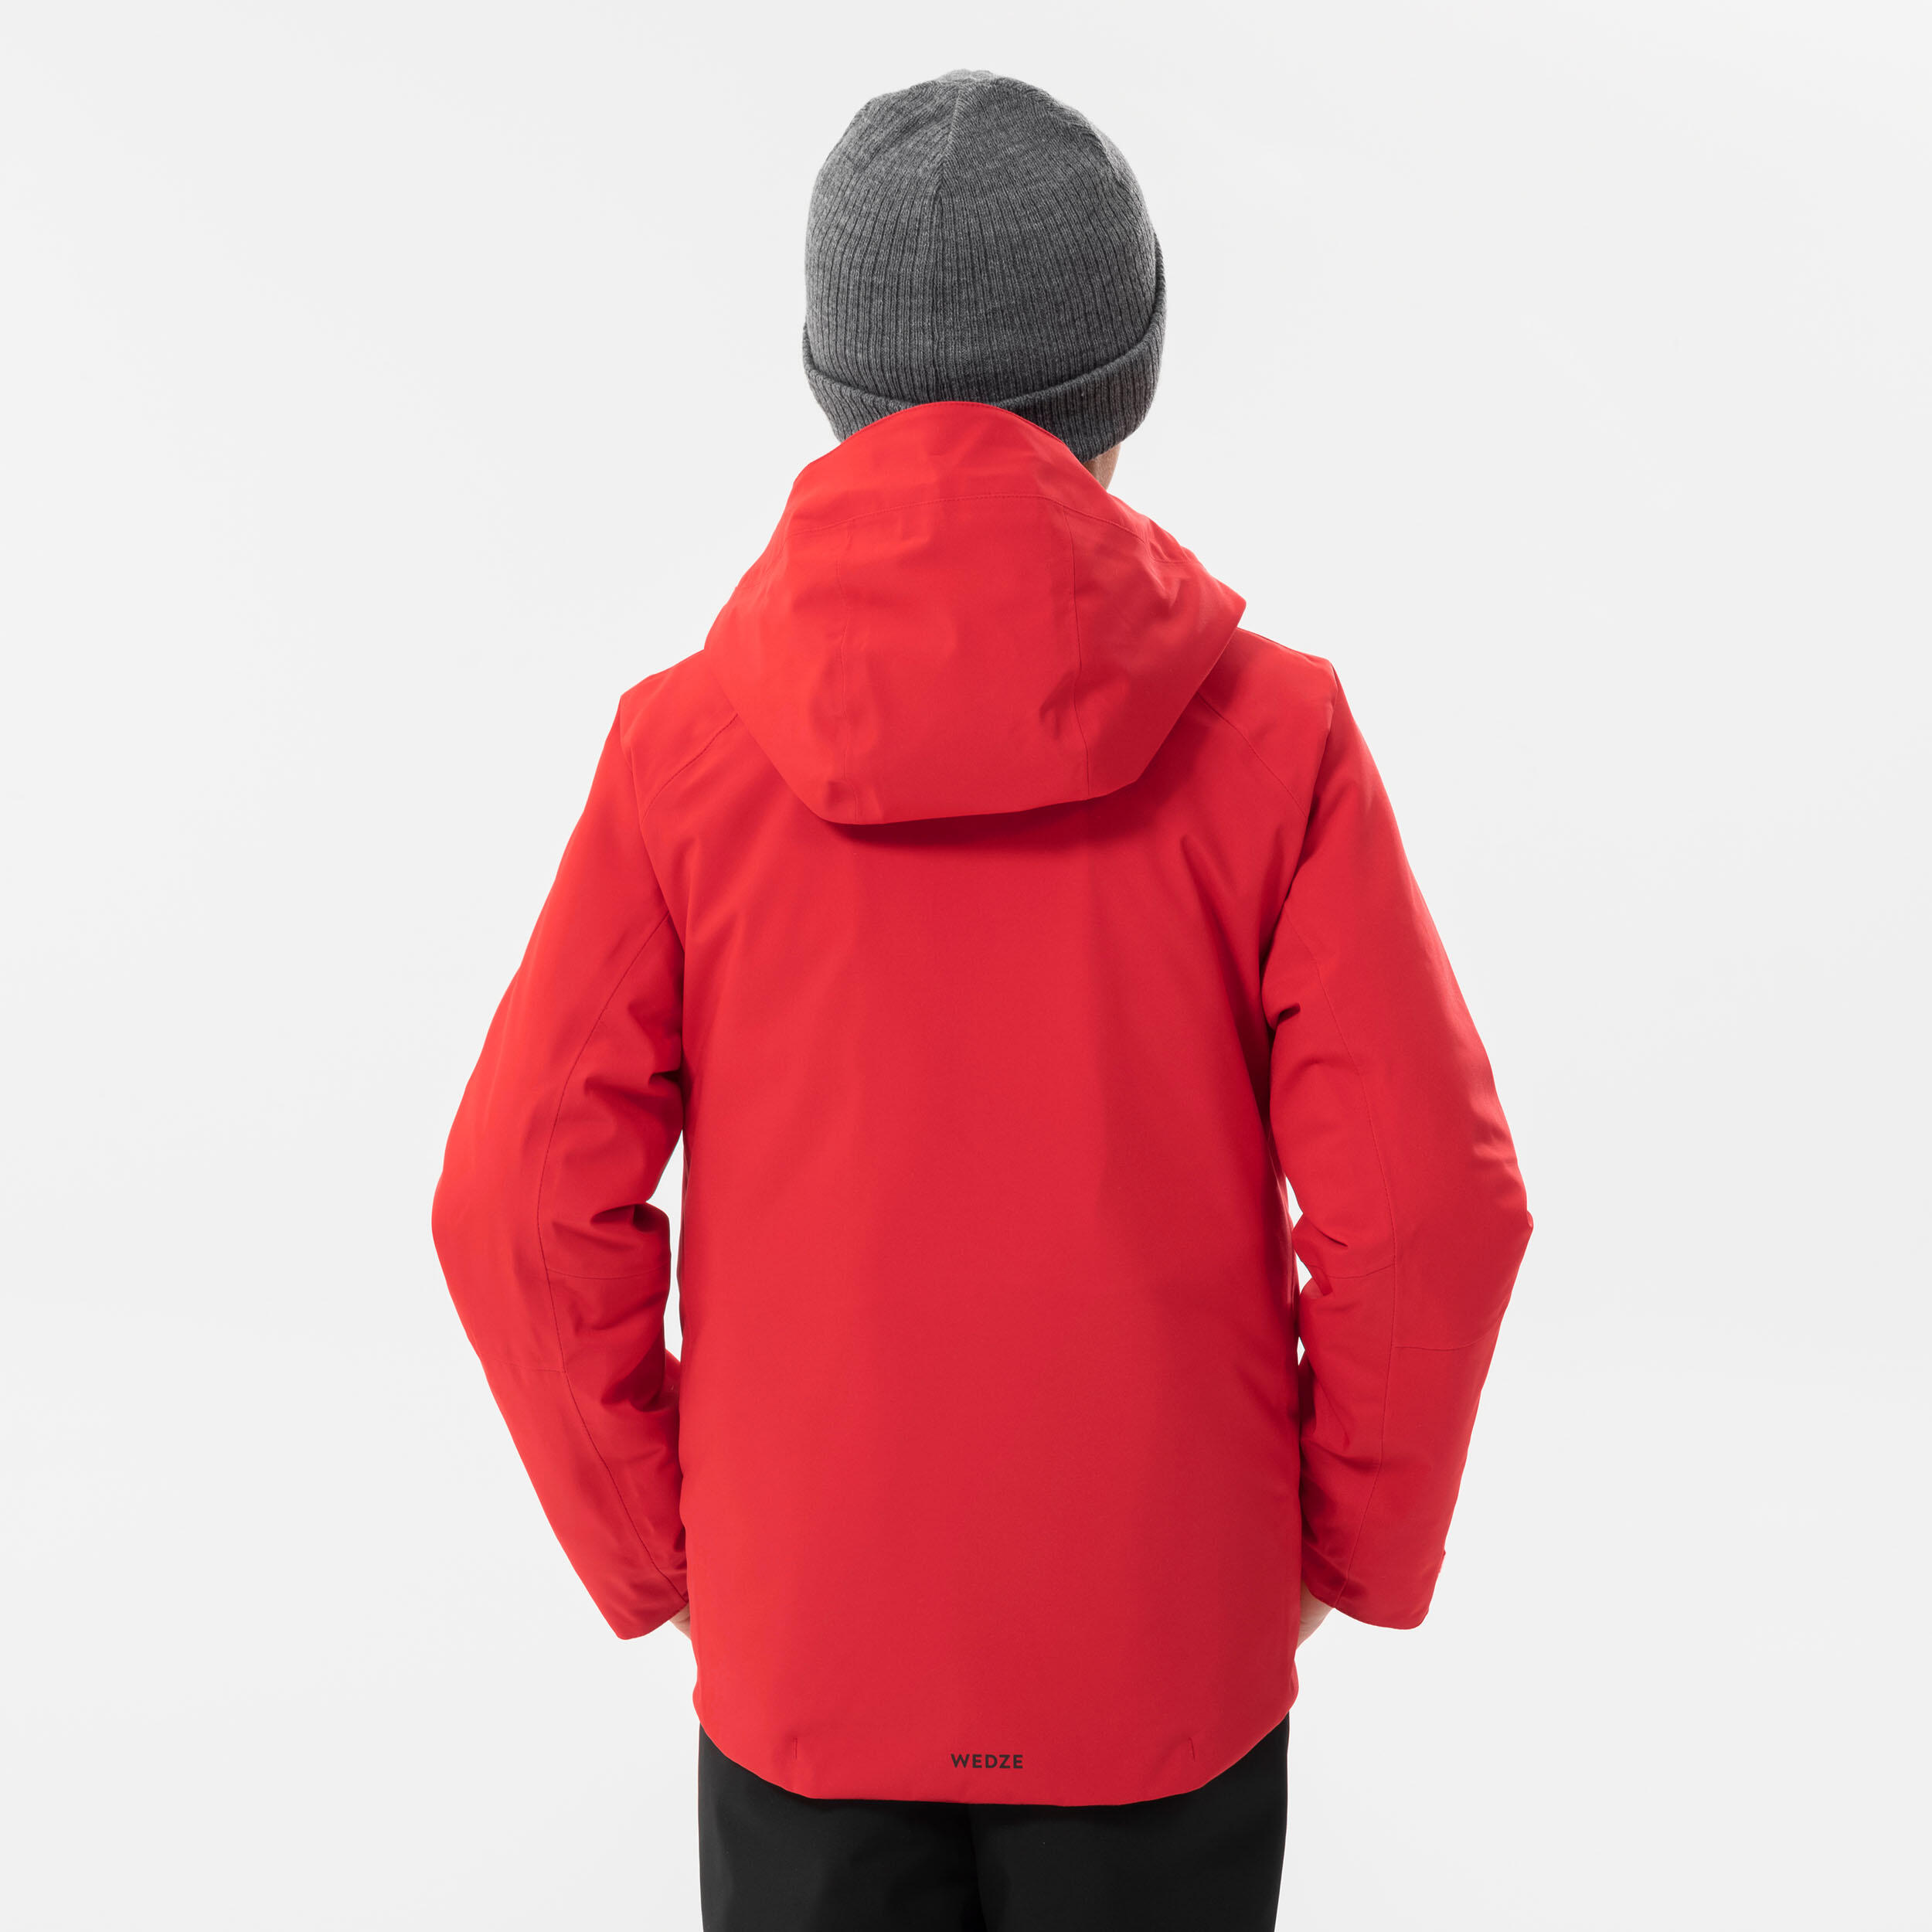 Kids’ Warm and Waterproof Ski Jacket 550 - Red 8/15